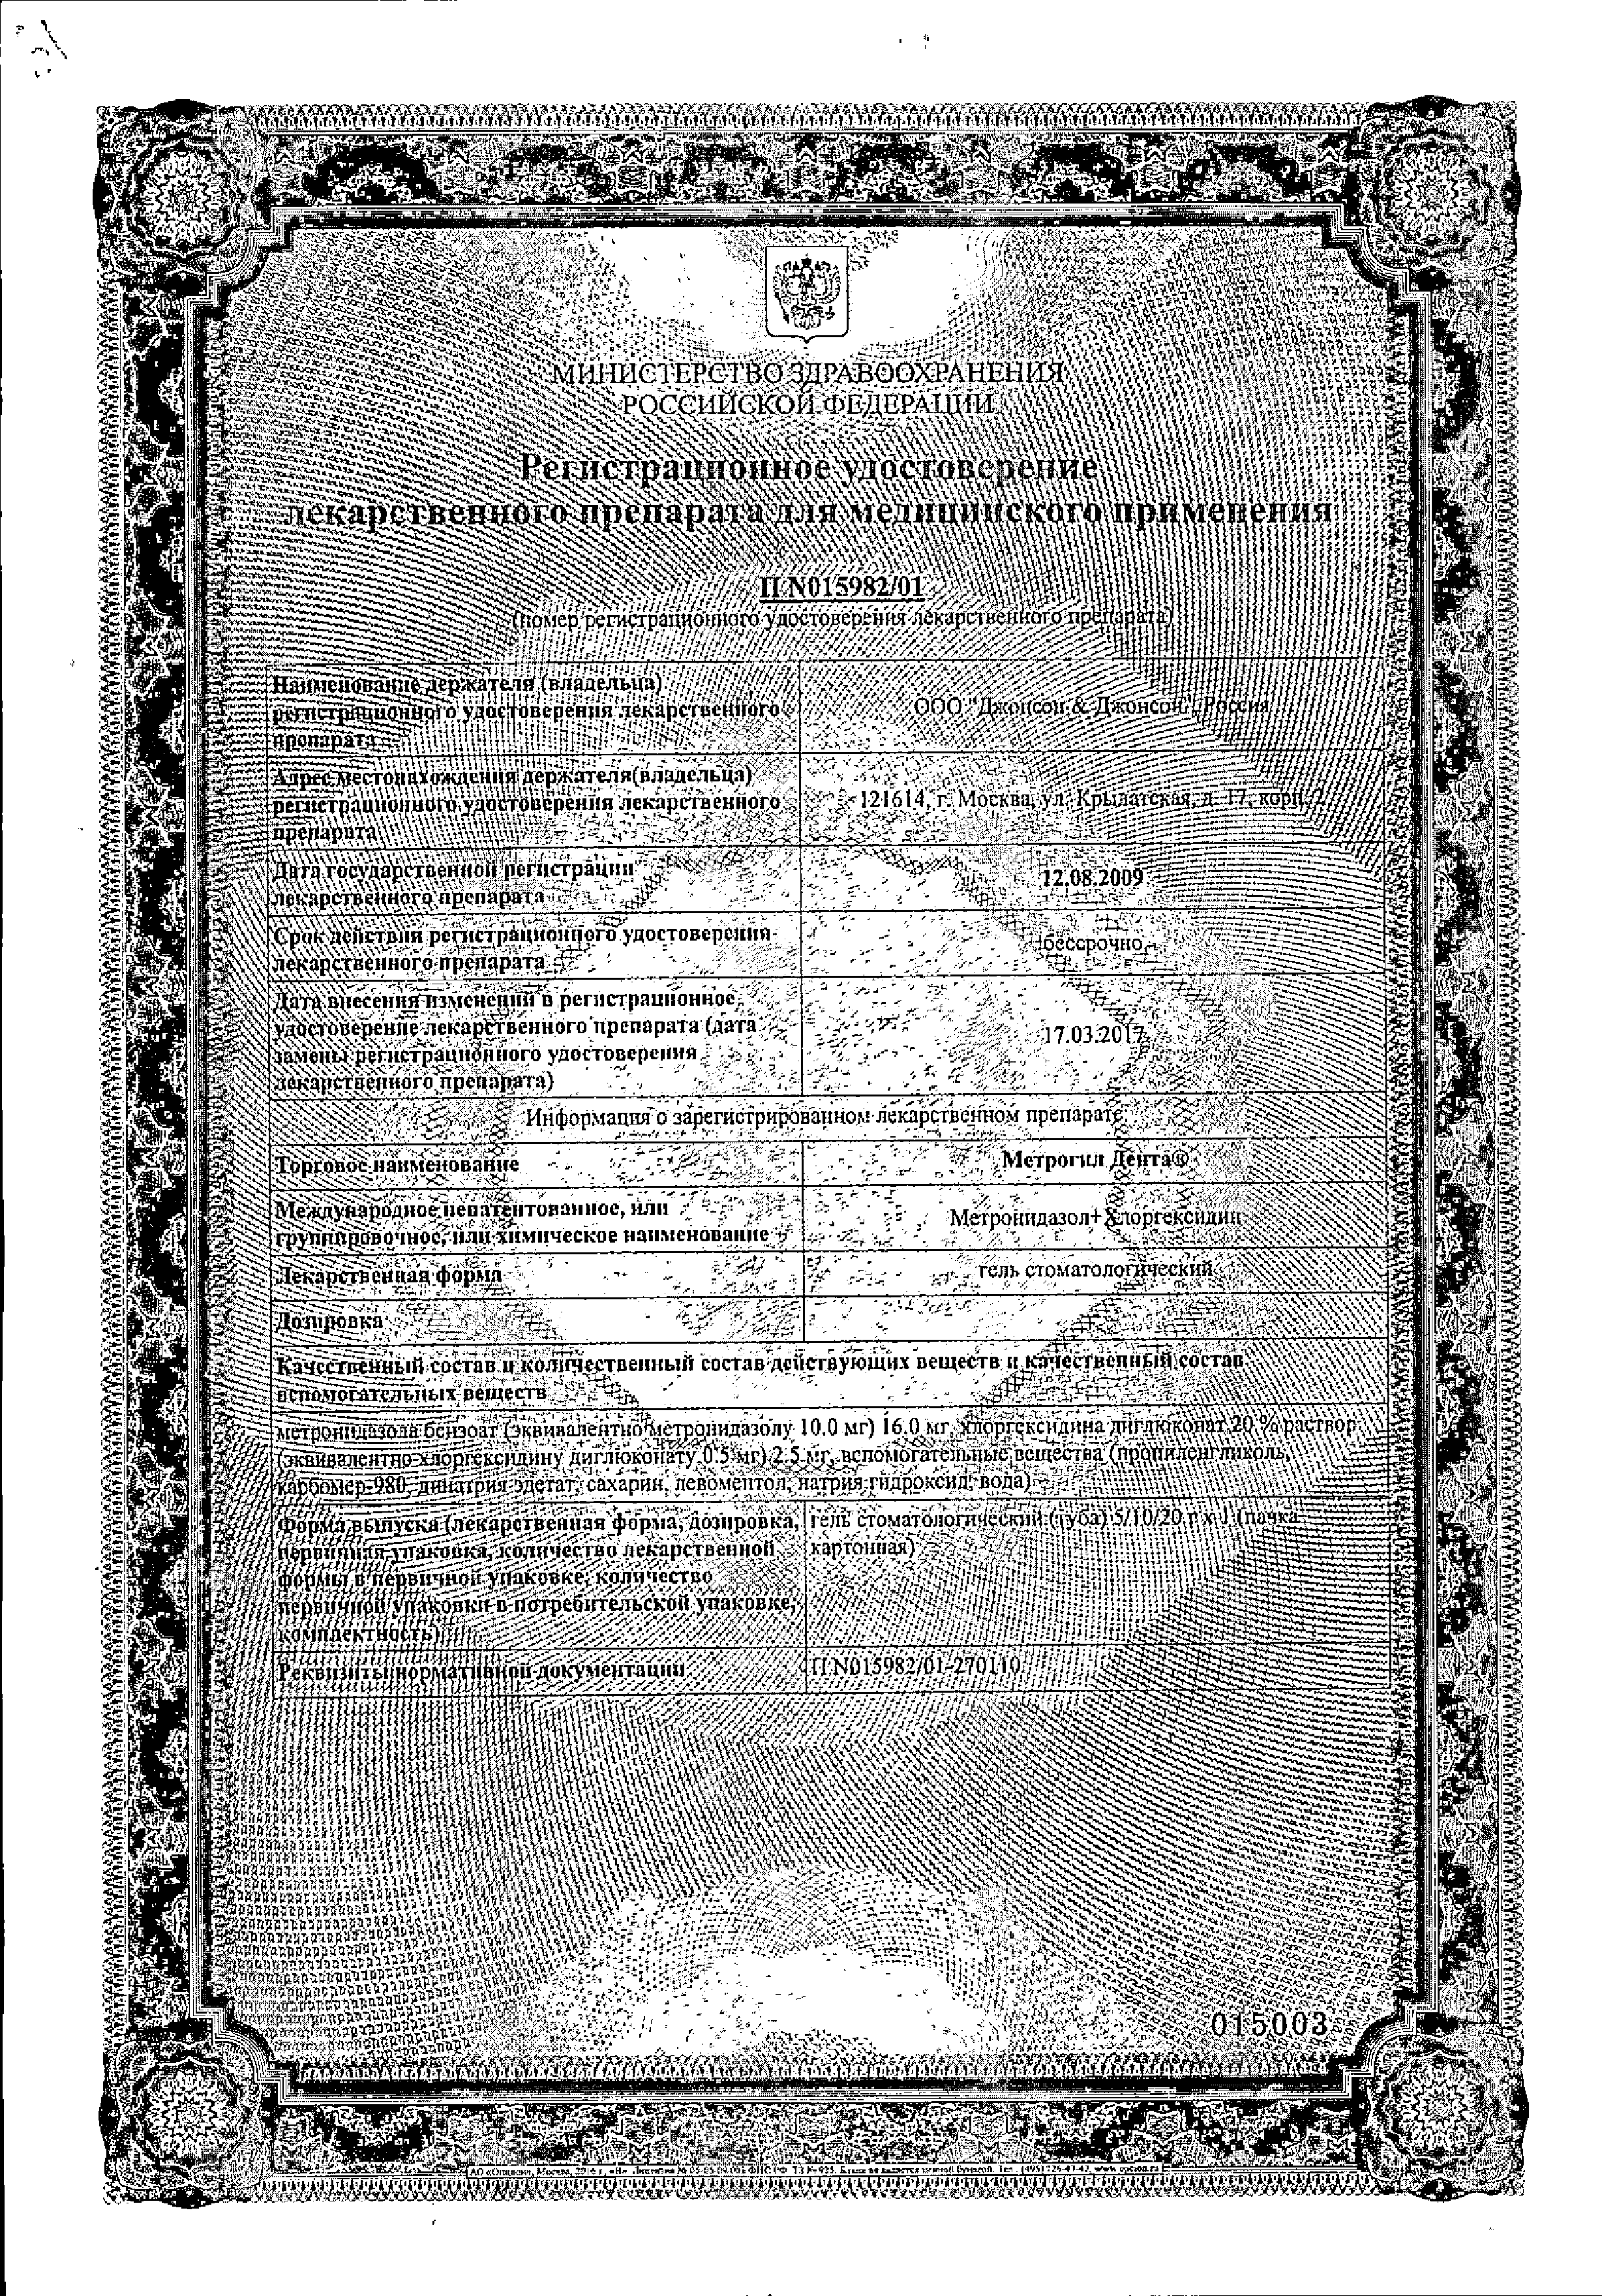 Метрогил Дента сертификат